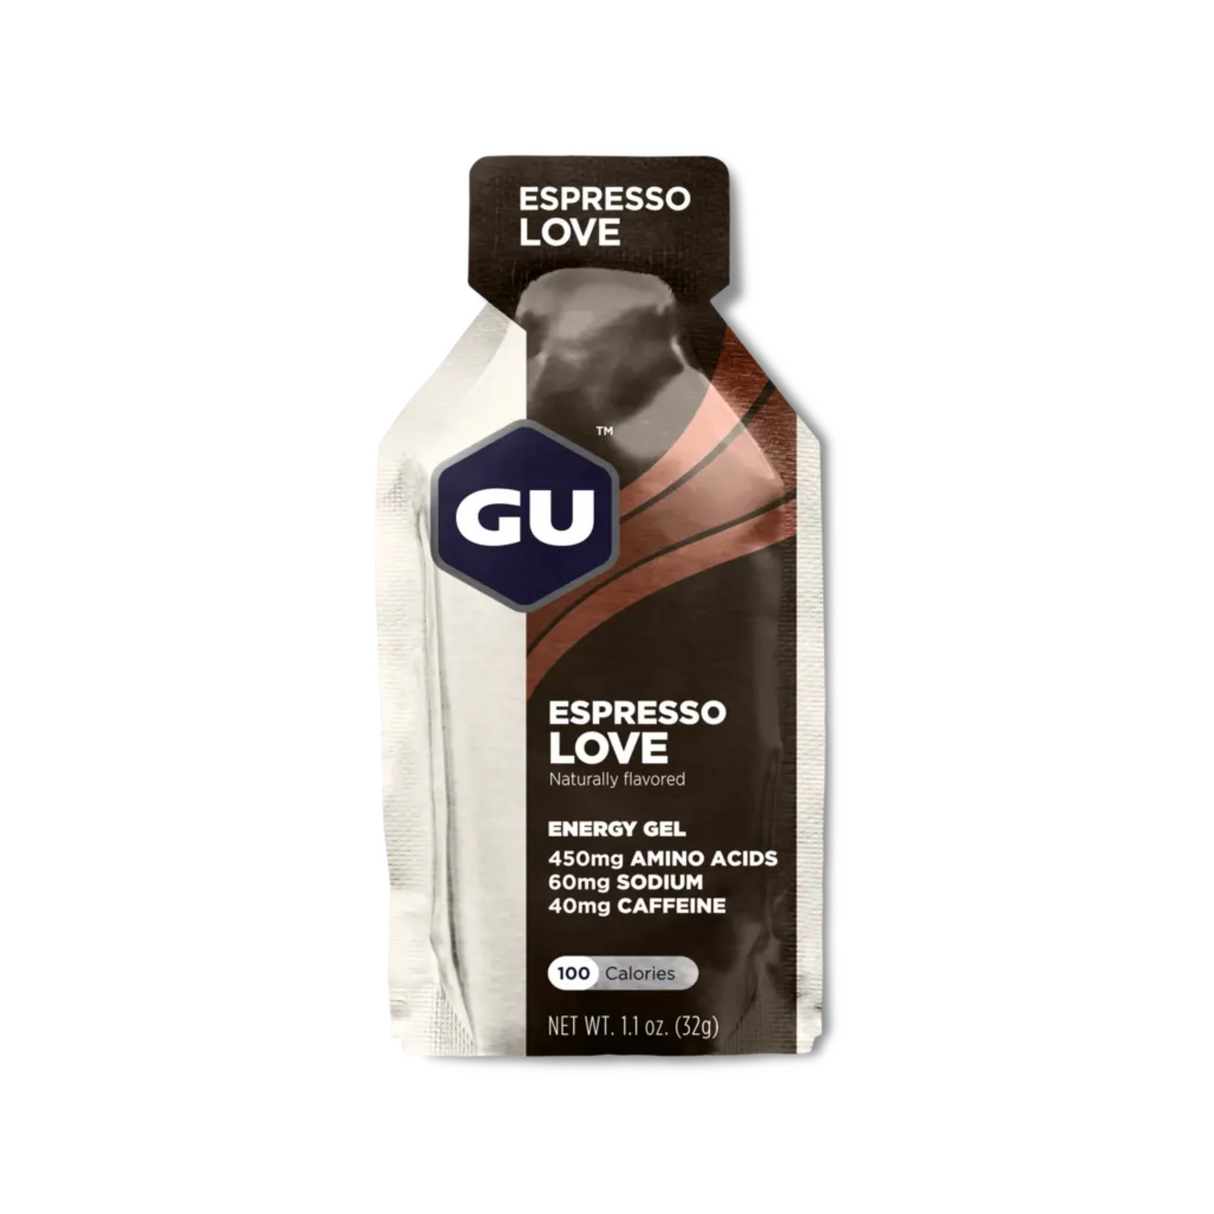 GU Energy Original Sports Nutrition Energy Gel (Espresso Love)